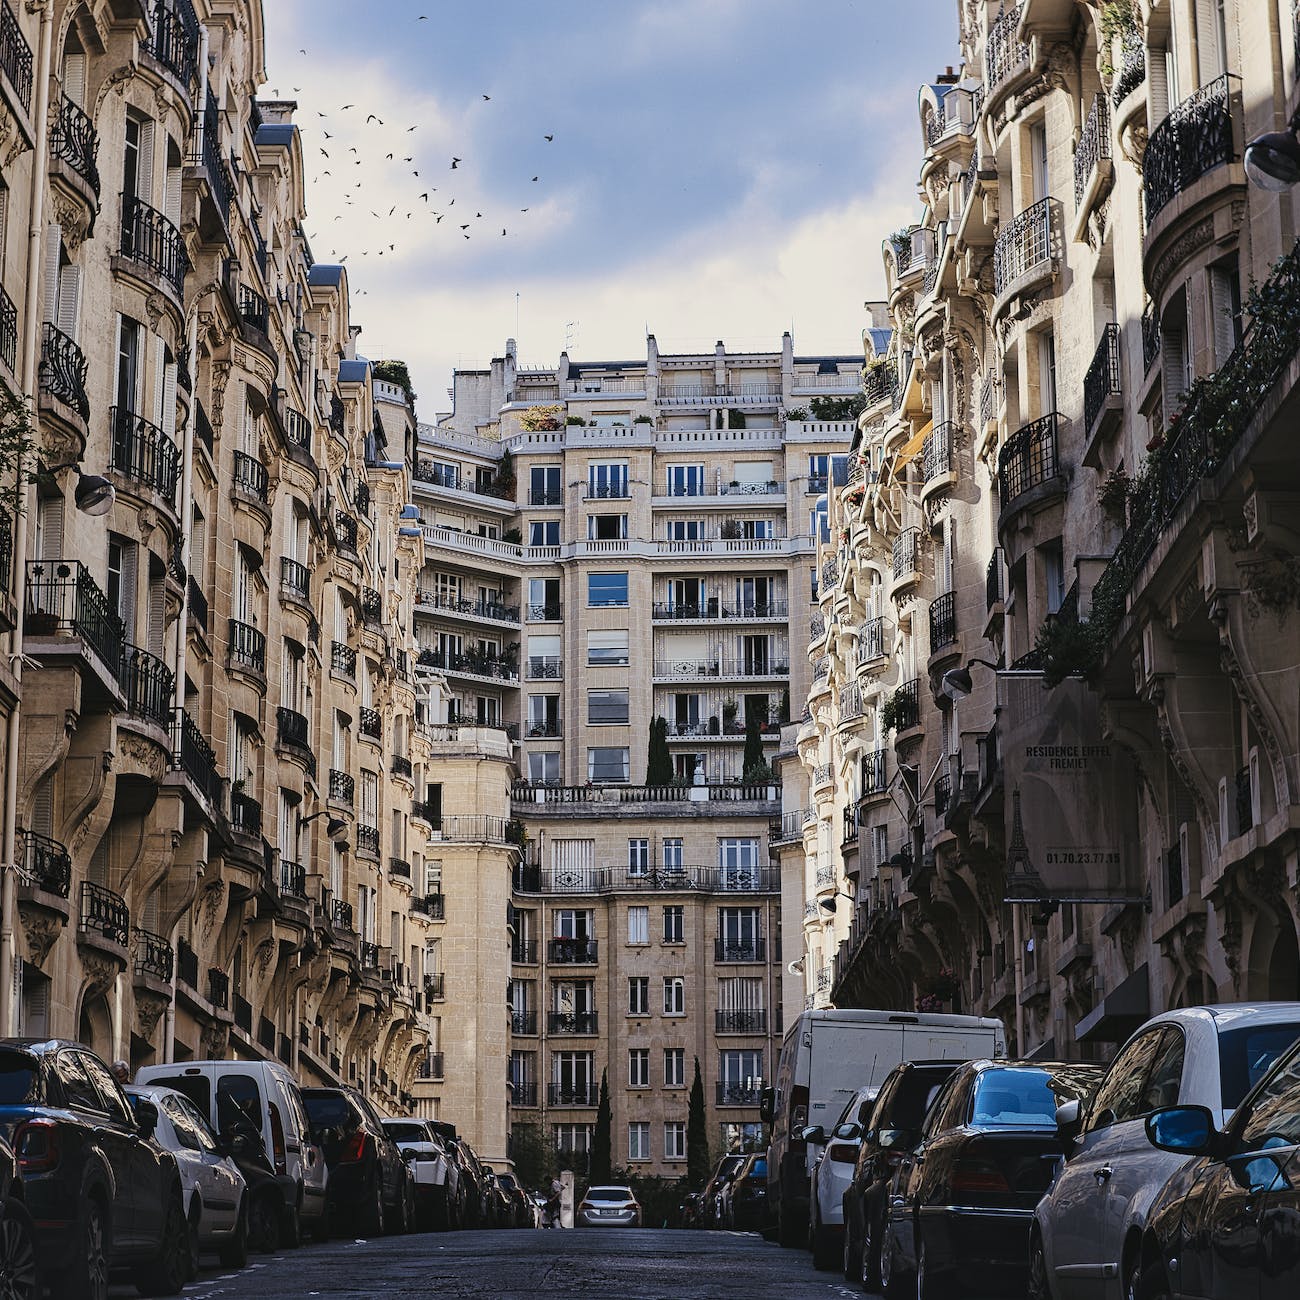 symmetrical view of haussmann buildings in paris